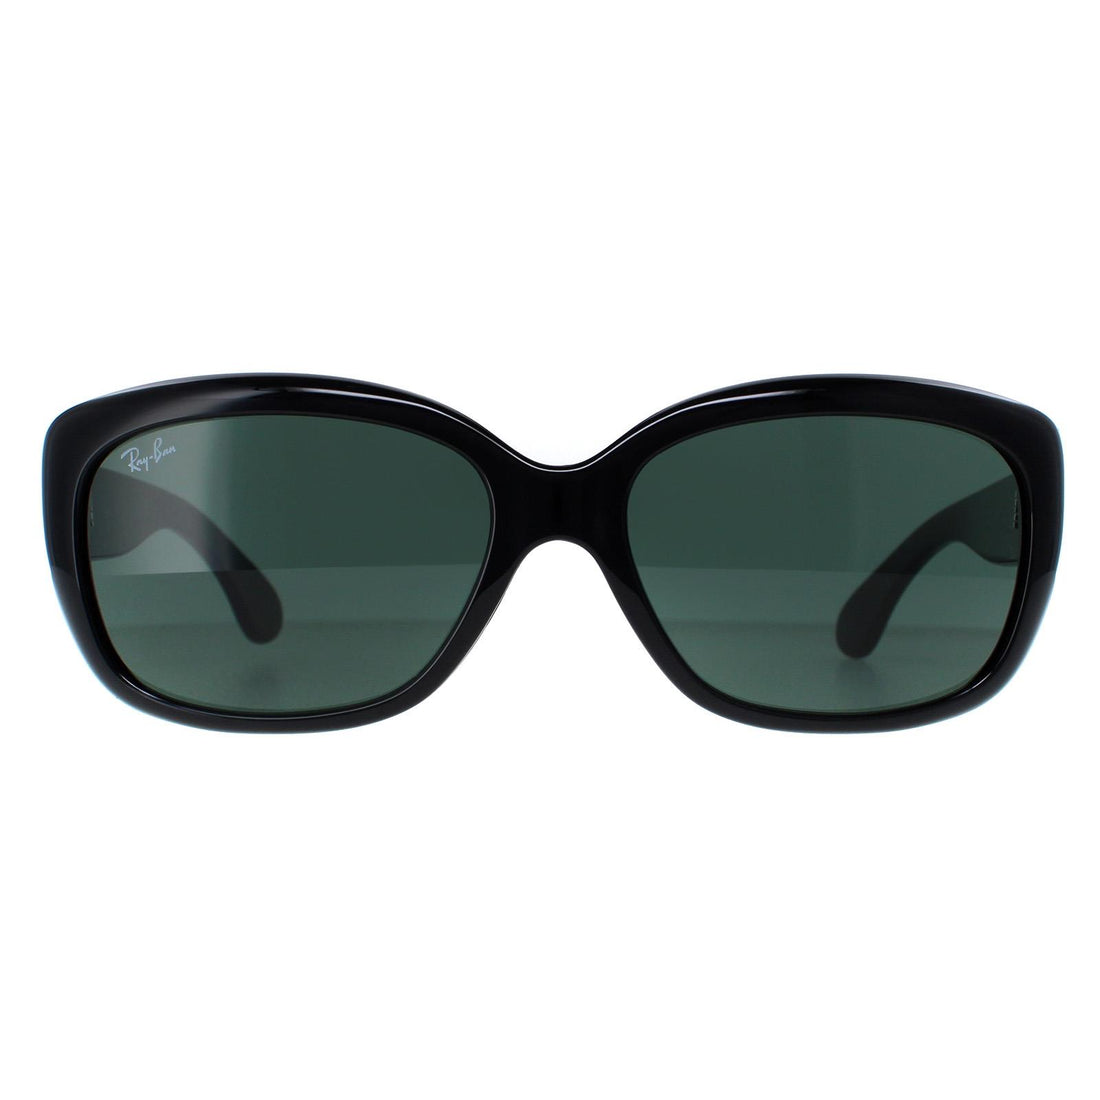 Ray-Ban Jackie Ohh RB4101 Sunglasses Black Green